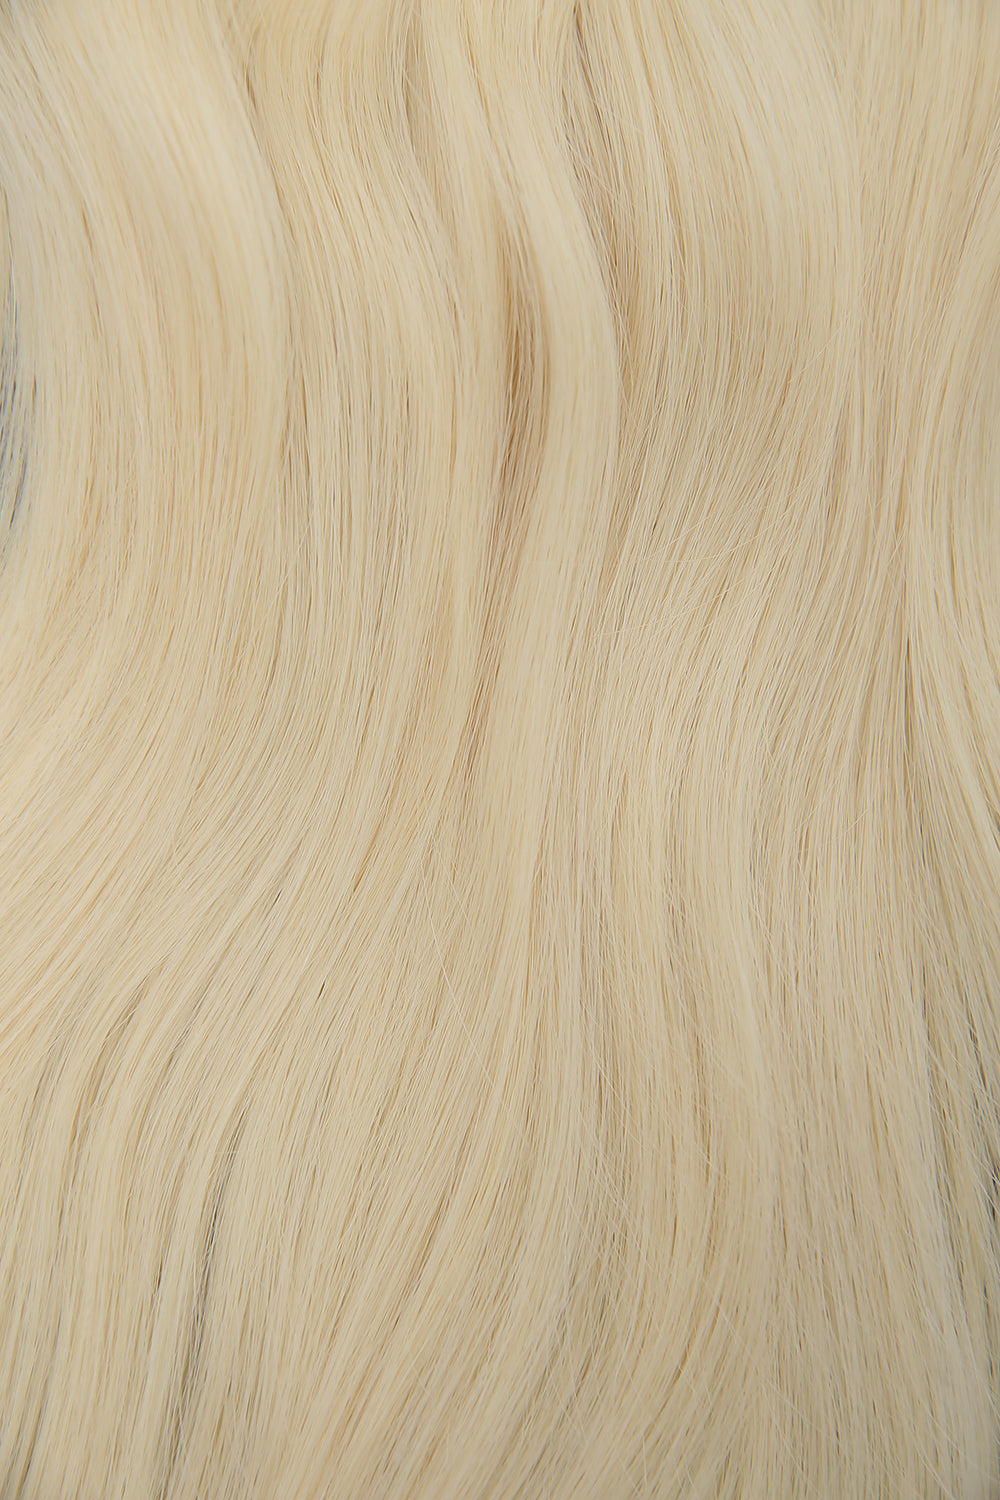 #613 Platinum Blonde Clip In Hair Extensions 7PCS